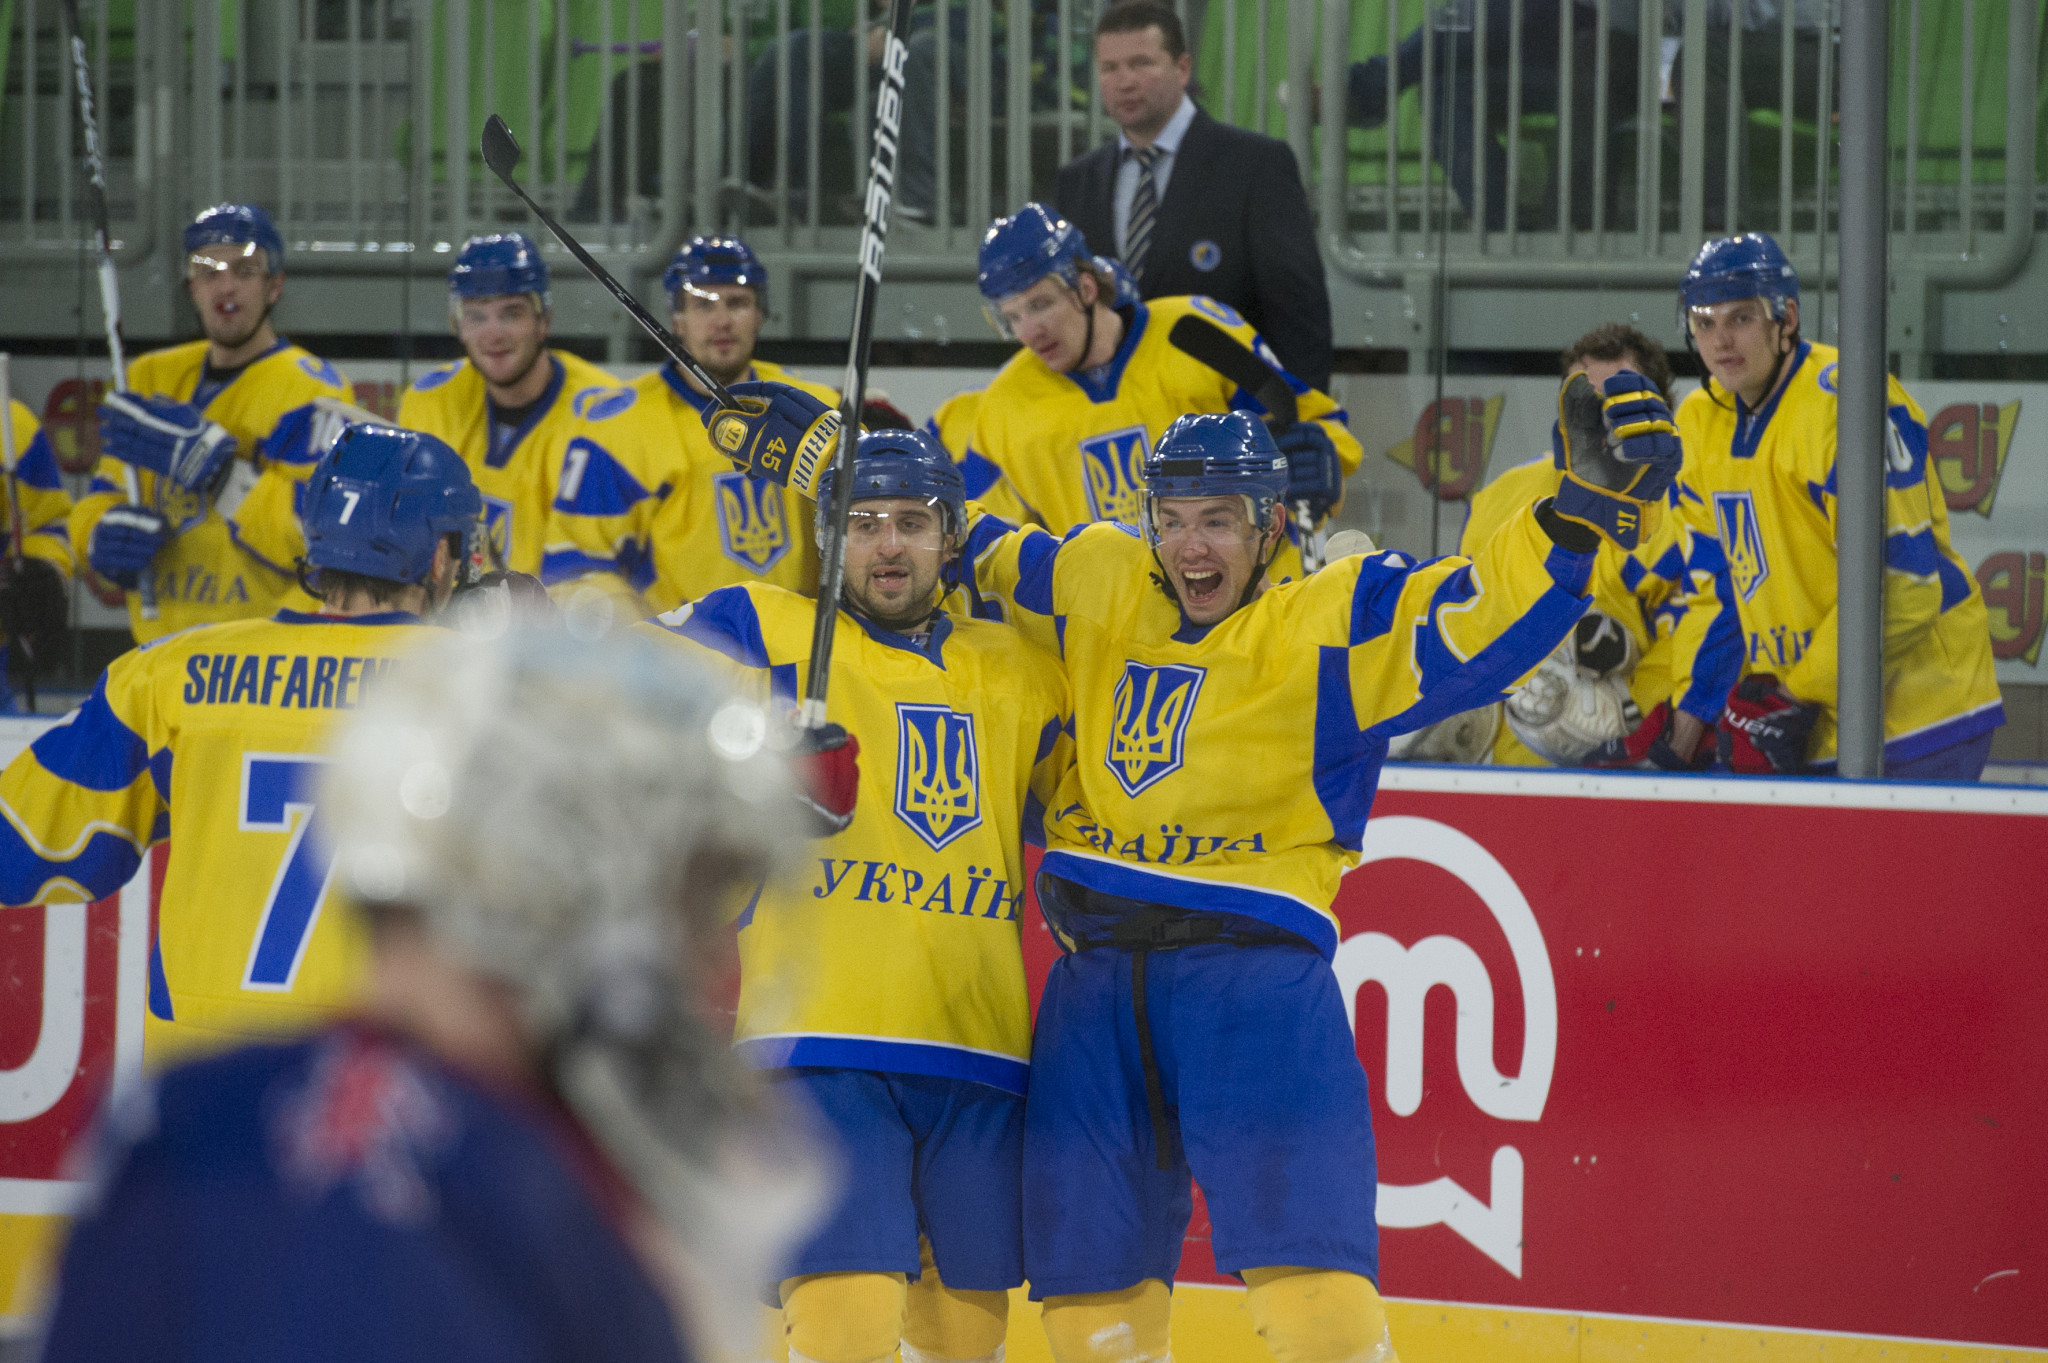 Ukrainian refugees to receive ice hockey equipment thanks to NHLPA and IIHF